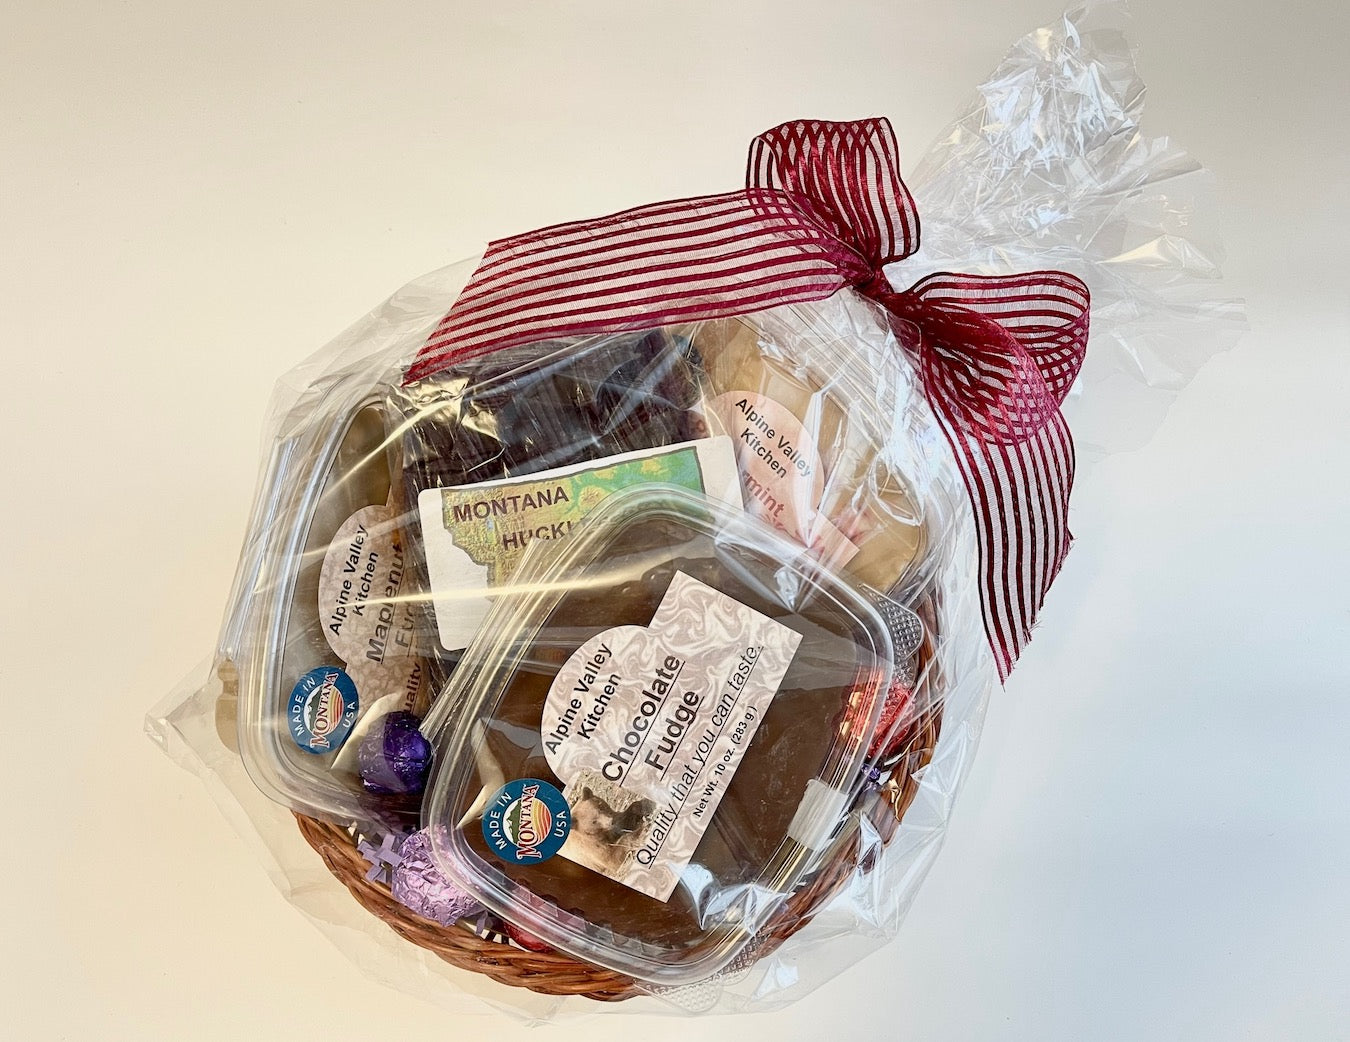 Shop Fudge Gift Baskets from Michigan - Ryba's Mackinac Island Fudge Shop